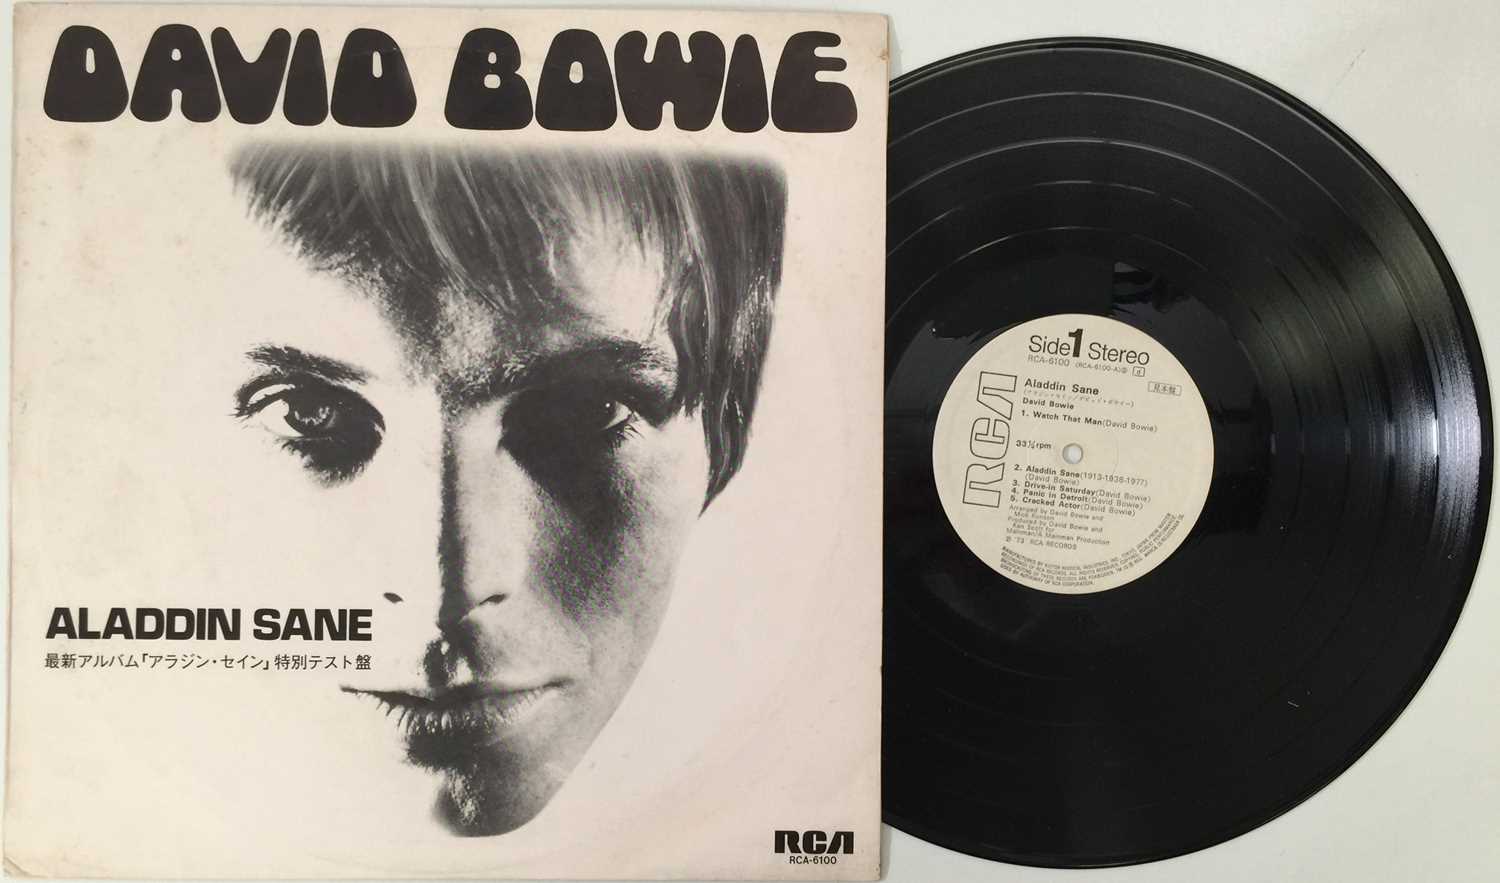 DAVID BOWIE - ALADDIN SANE LP (JAPANESE PROMO - RCA-6100)